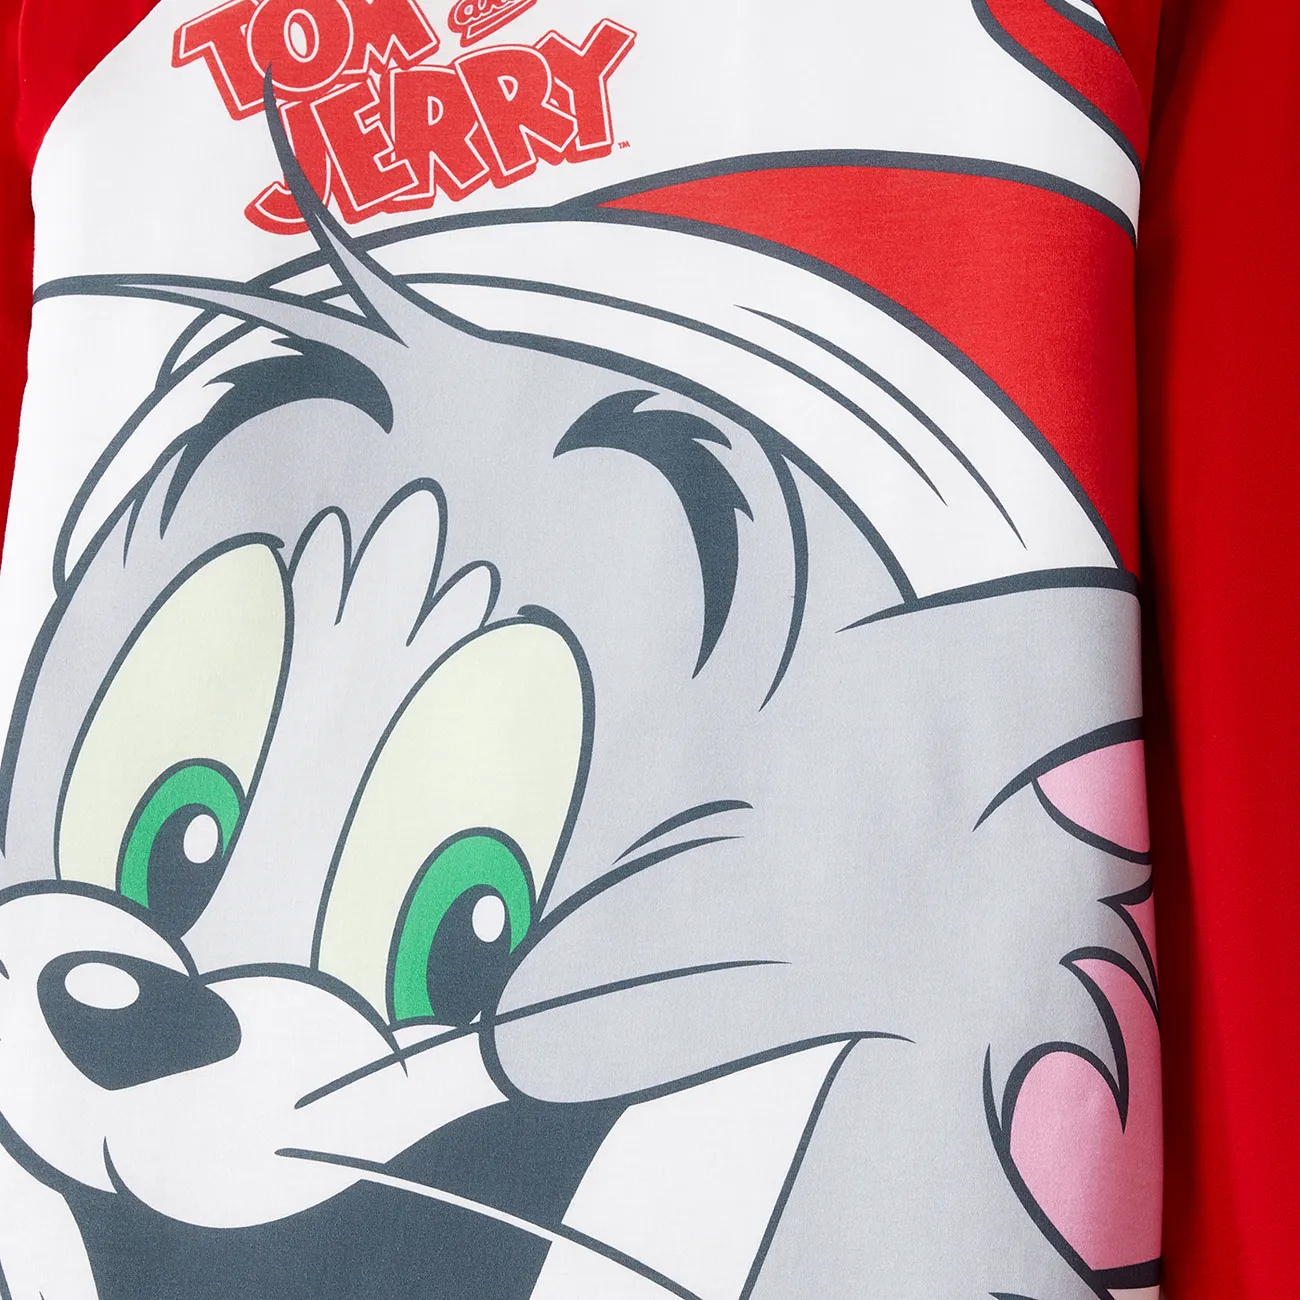 Tom and Jerry 聖誕節 全家裝 長袖 親子裝 睡衣 (Flame Resistant) 紅色 big image 1